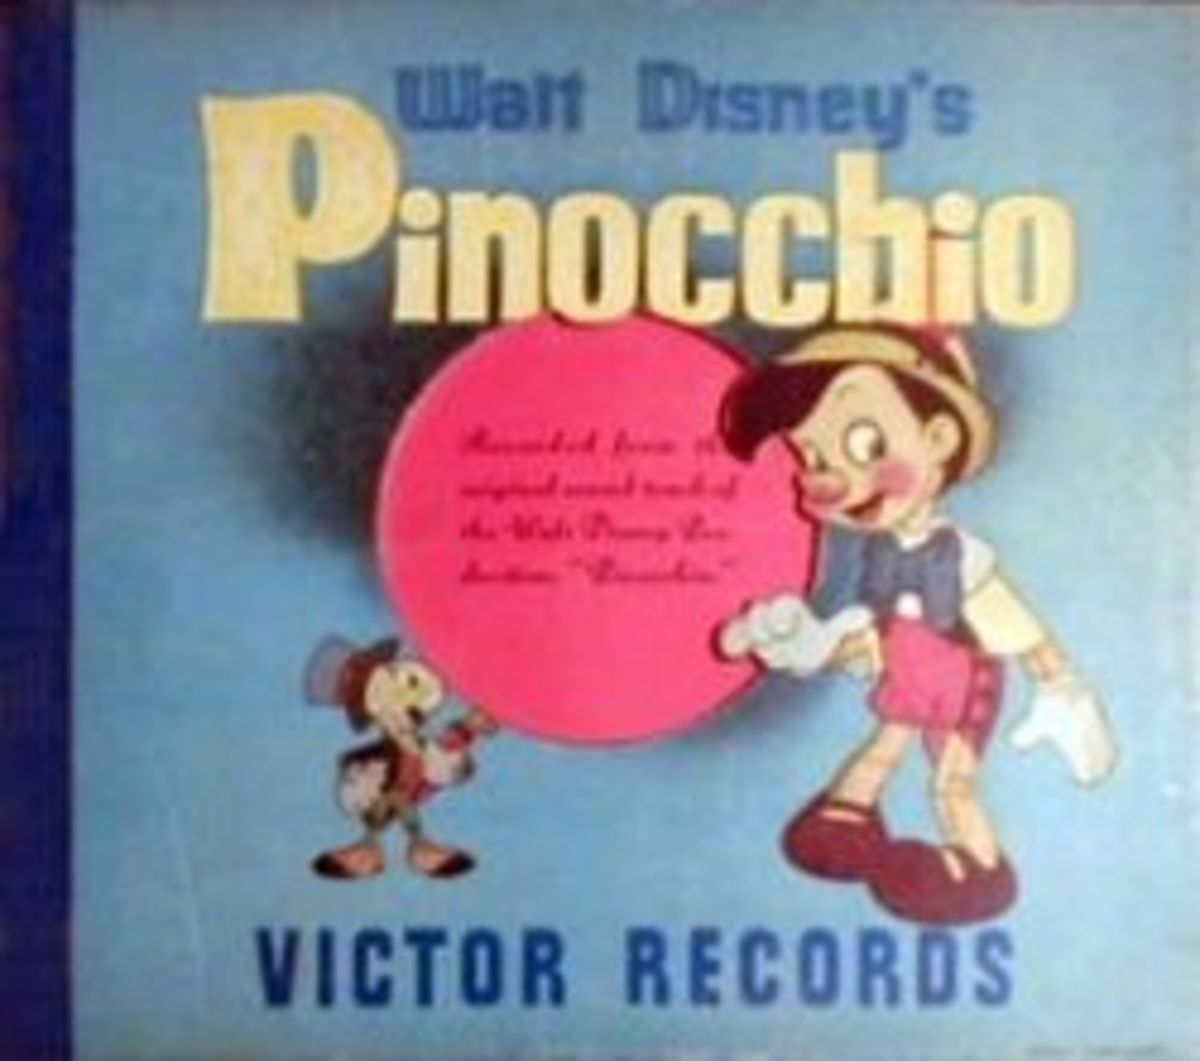 Walt Disney's "Pinocchio" RCA Victor Records P-18 (1940) 3 10" 78 rpm Shellac Record Set 